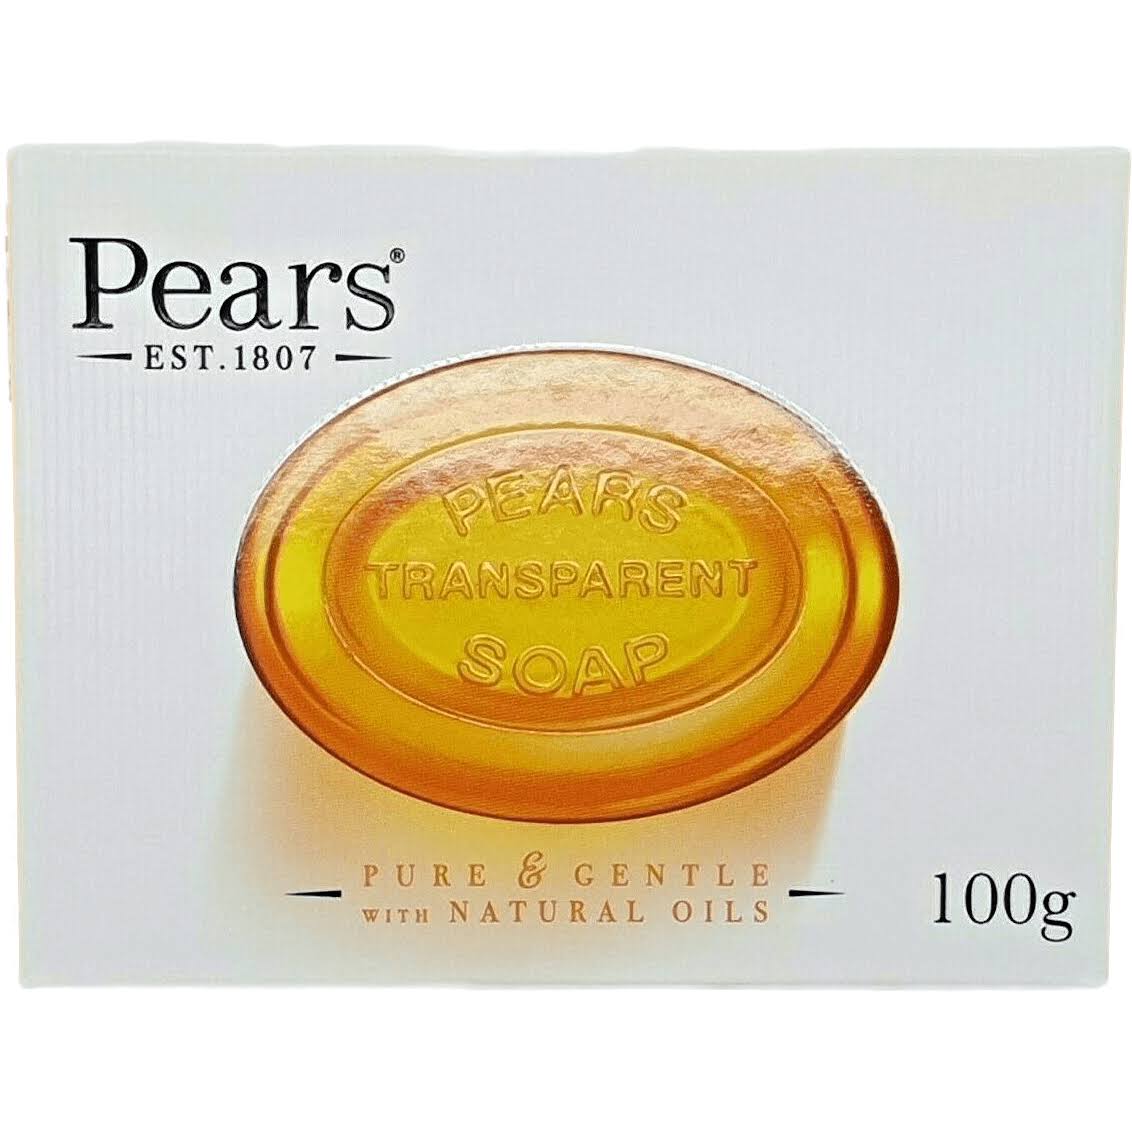 Pears Transparent Soap Bar - 100g